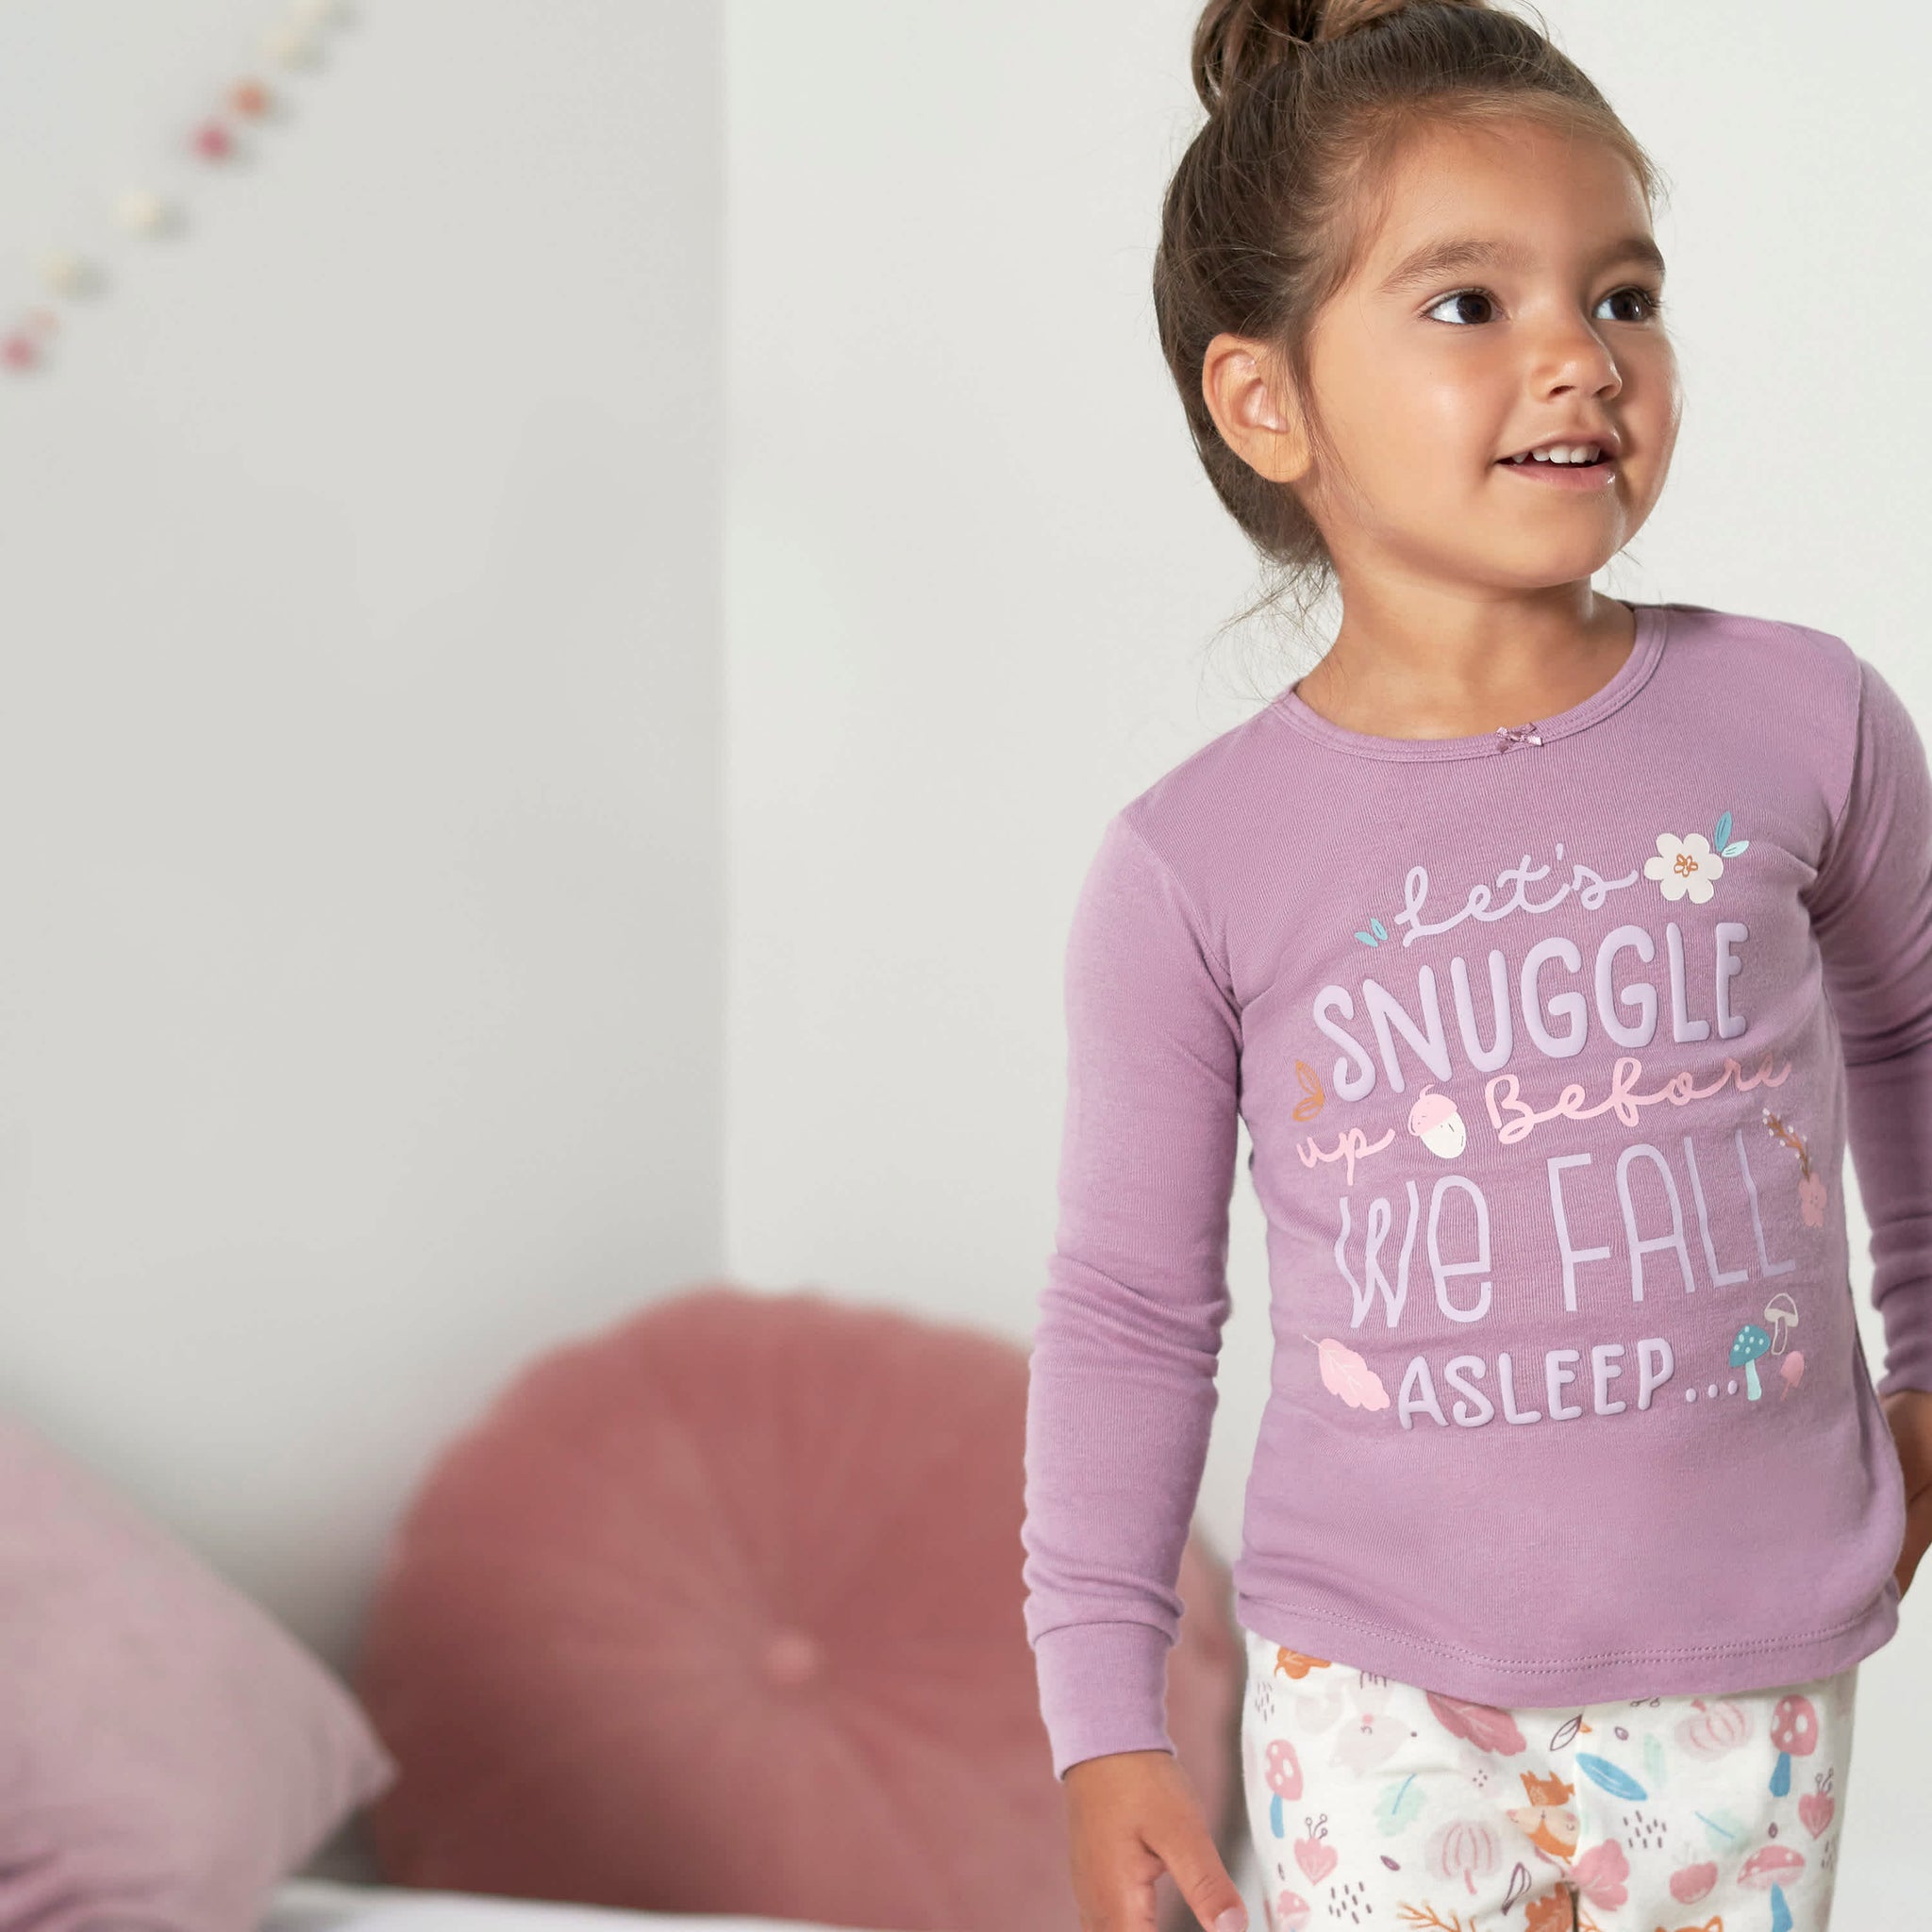 4-Piece Infant & Toddler Girls Purple Woodland Snug Fit Cotton Pajamas-Gerber Childrenswear Wholesale